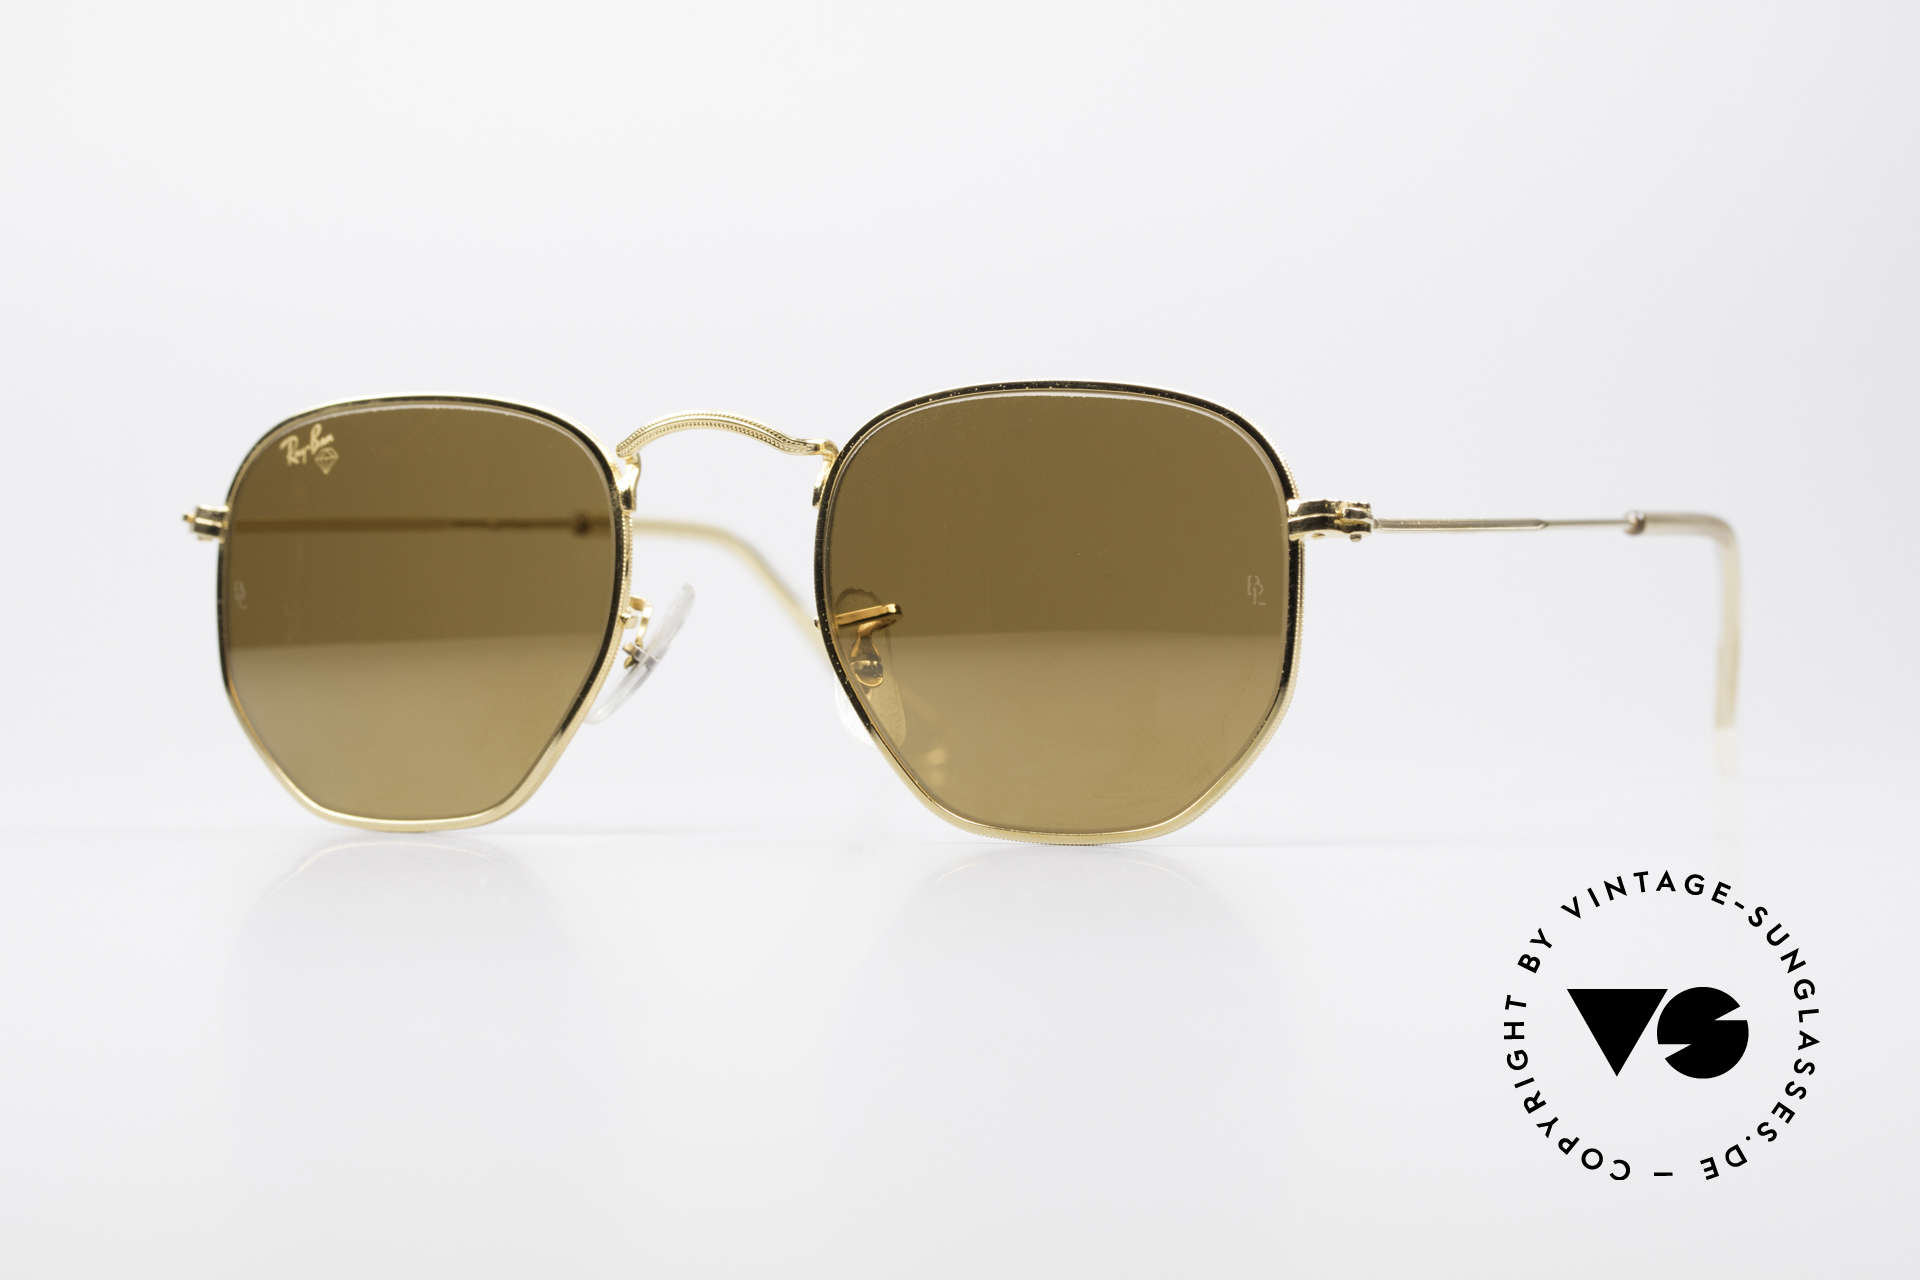 Sunglasses Ray Ban Classic Style III Diamond Hard Gold Mirrored